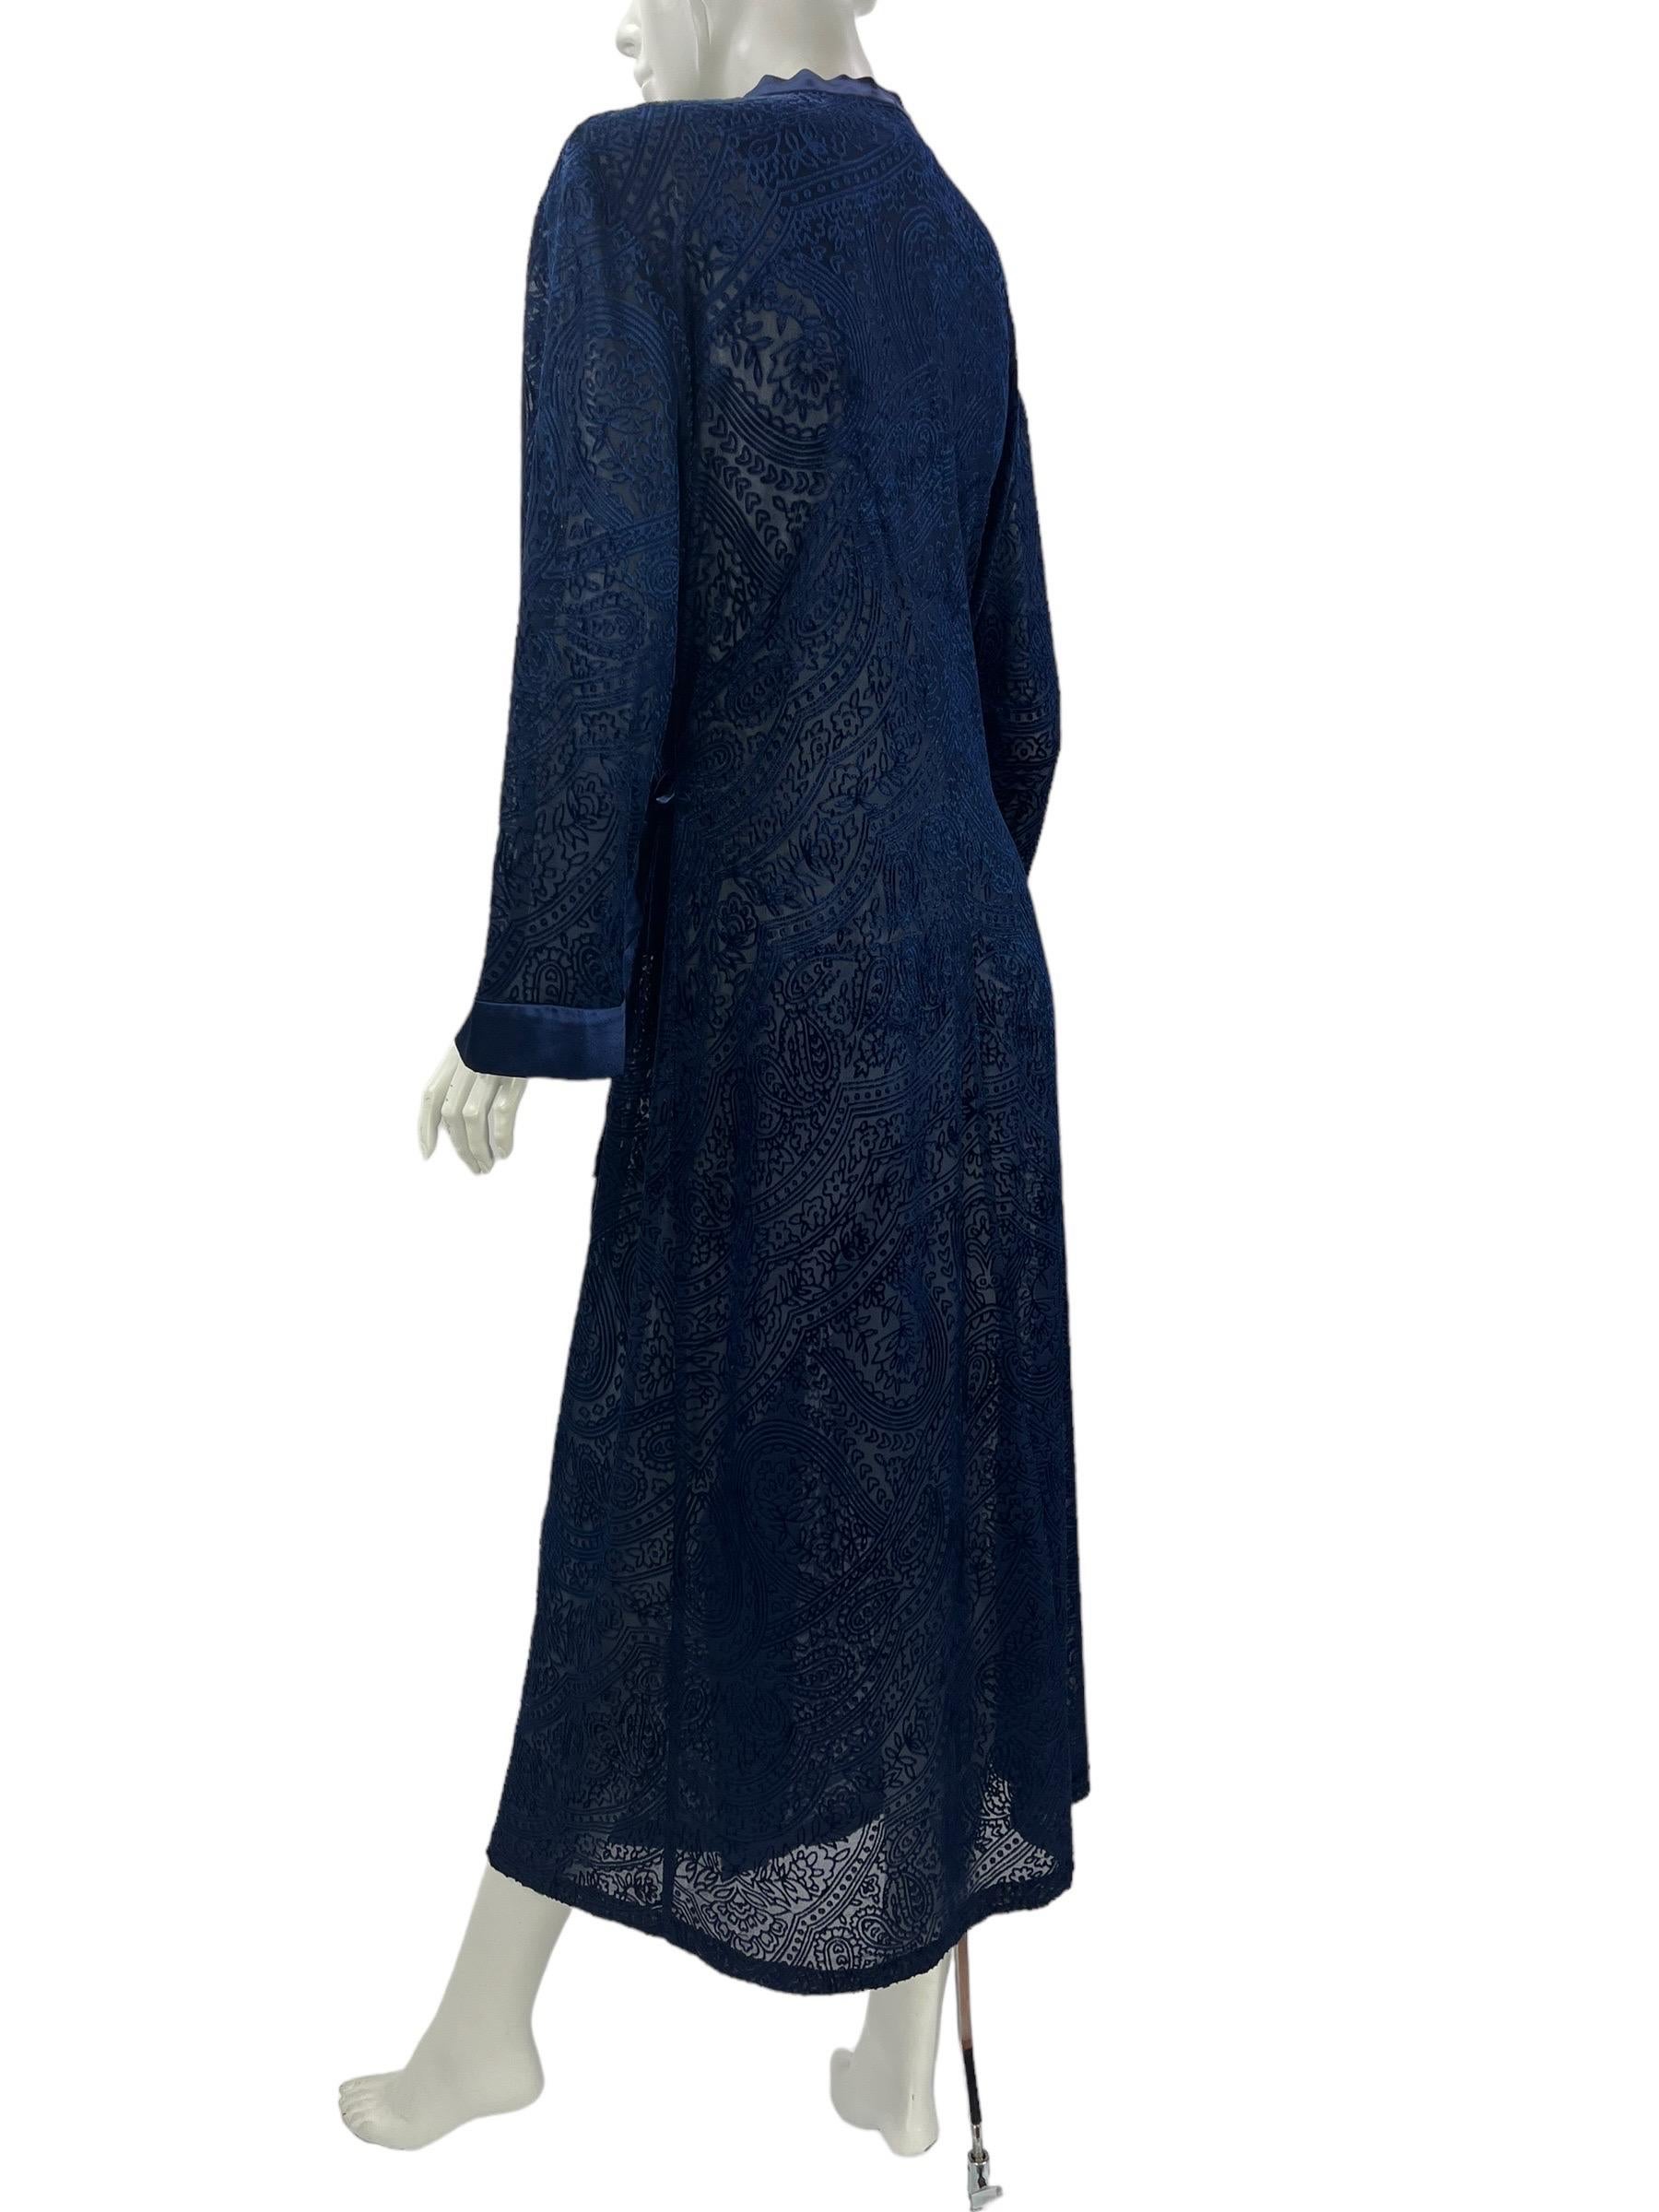 Women's New Vintage Oscar de la Renta midnight blue devore velvet lounge dress / robe  For Sale